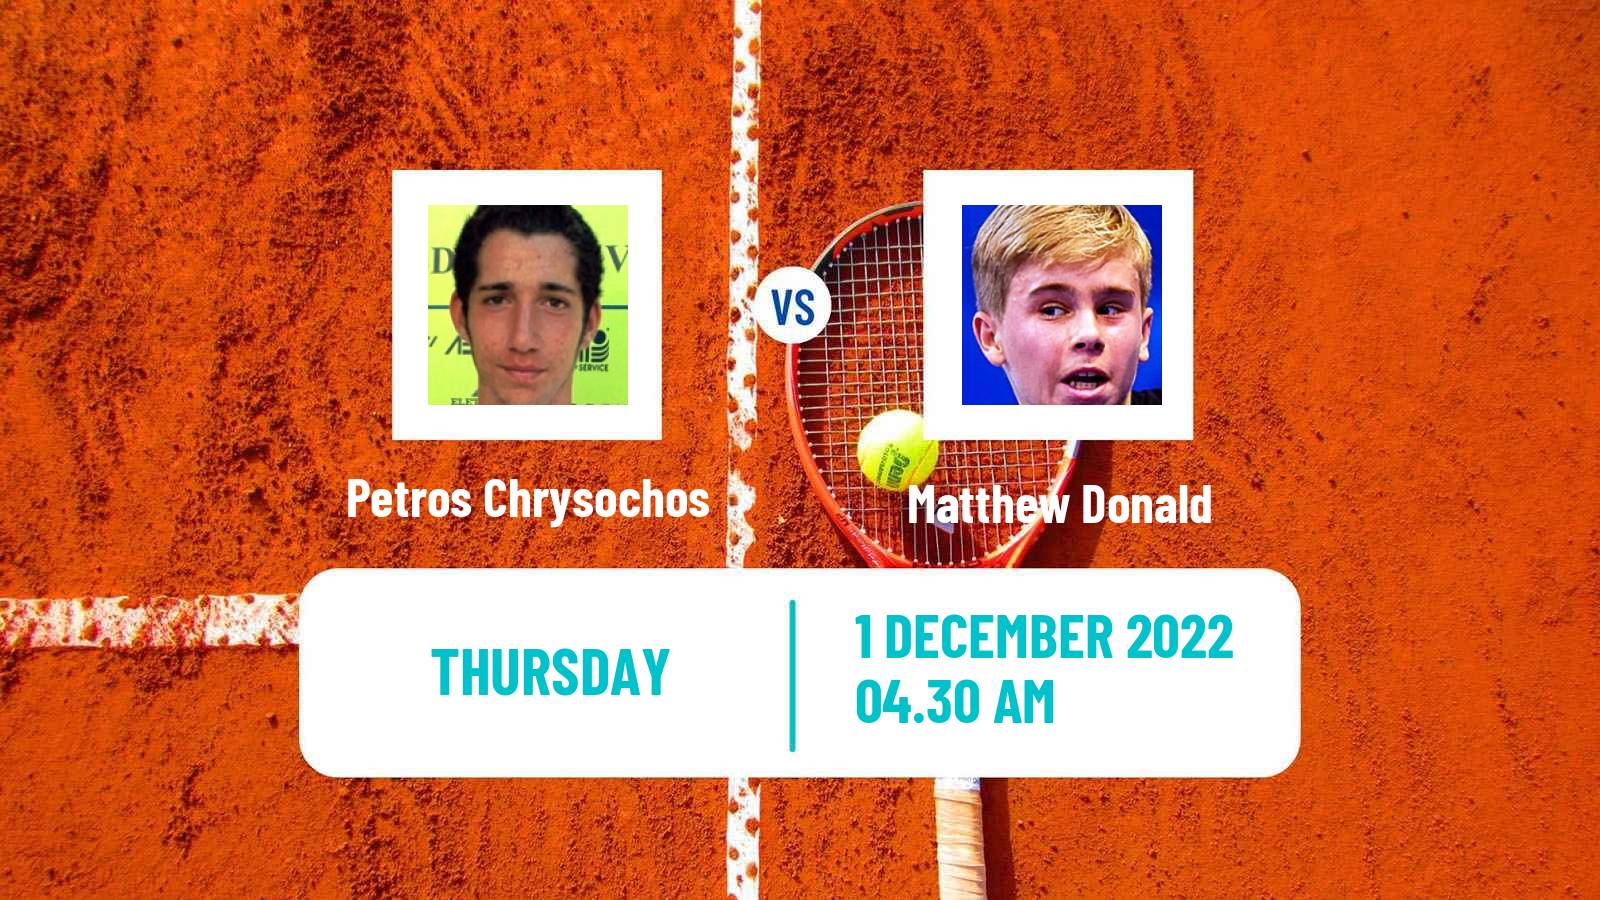 Tennis ITF Tournaments Petros Chrysochos - Matthew Donald